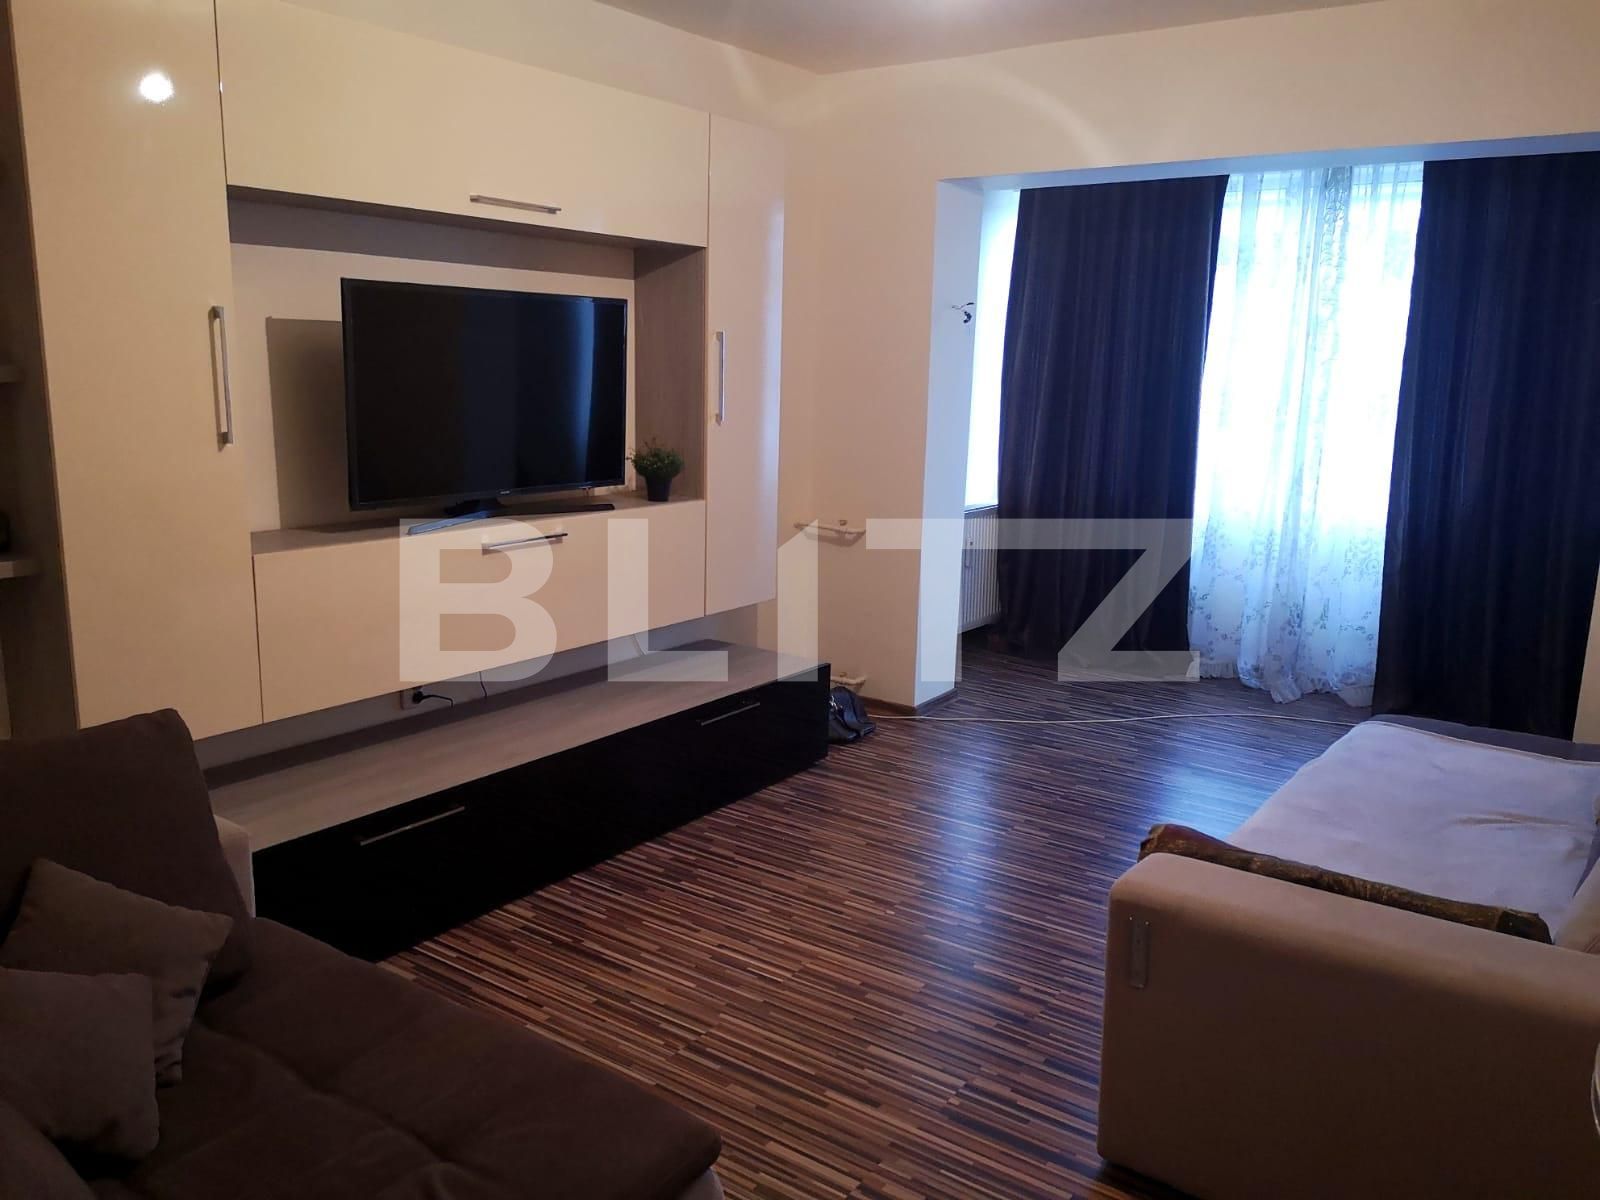 Apartament cochet cu 2 camere bilateral si decomandat, in zona Spitalul Miliar